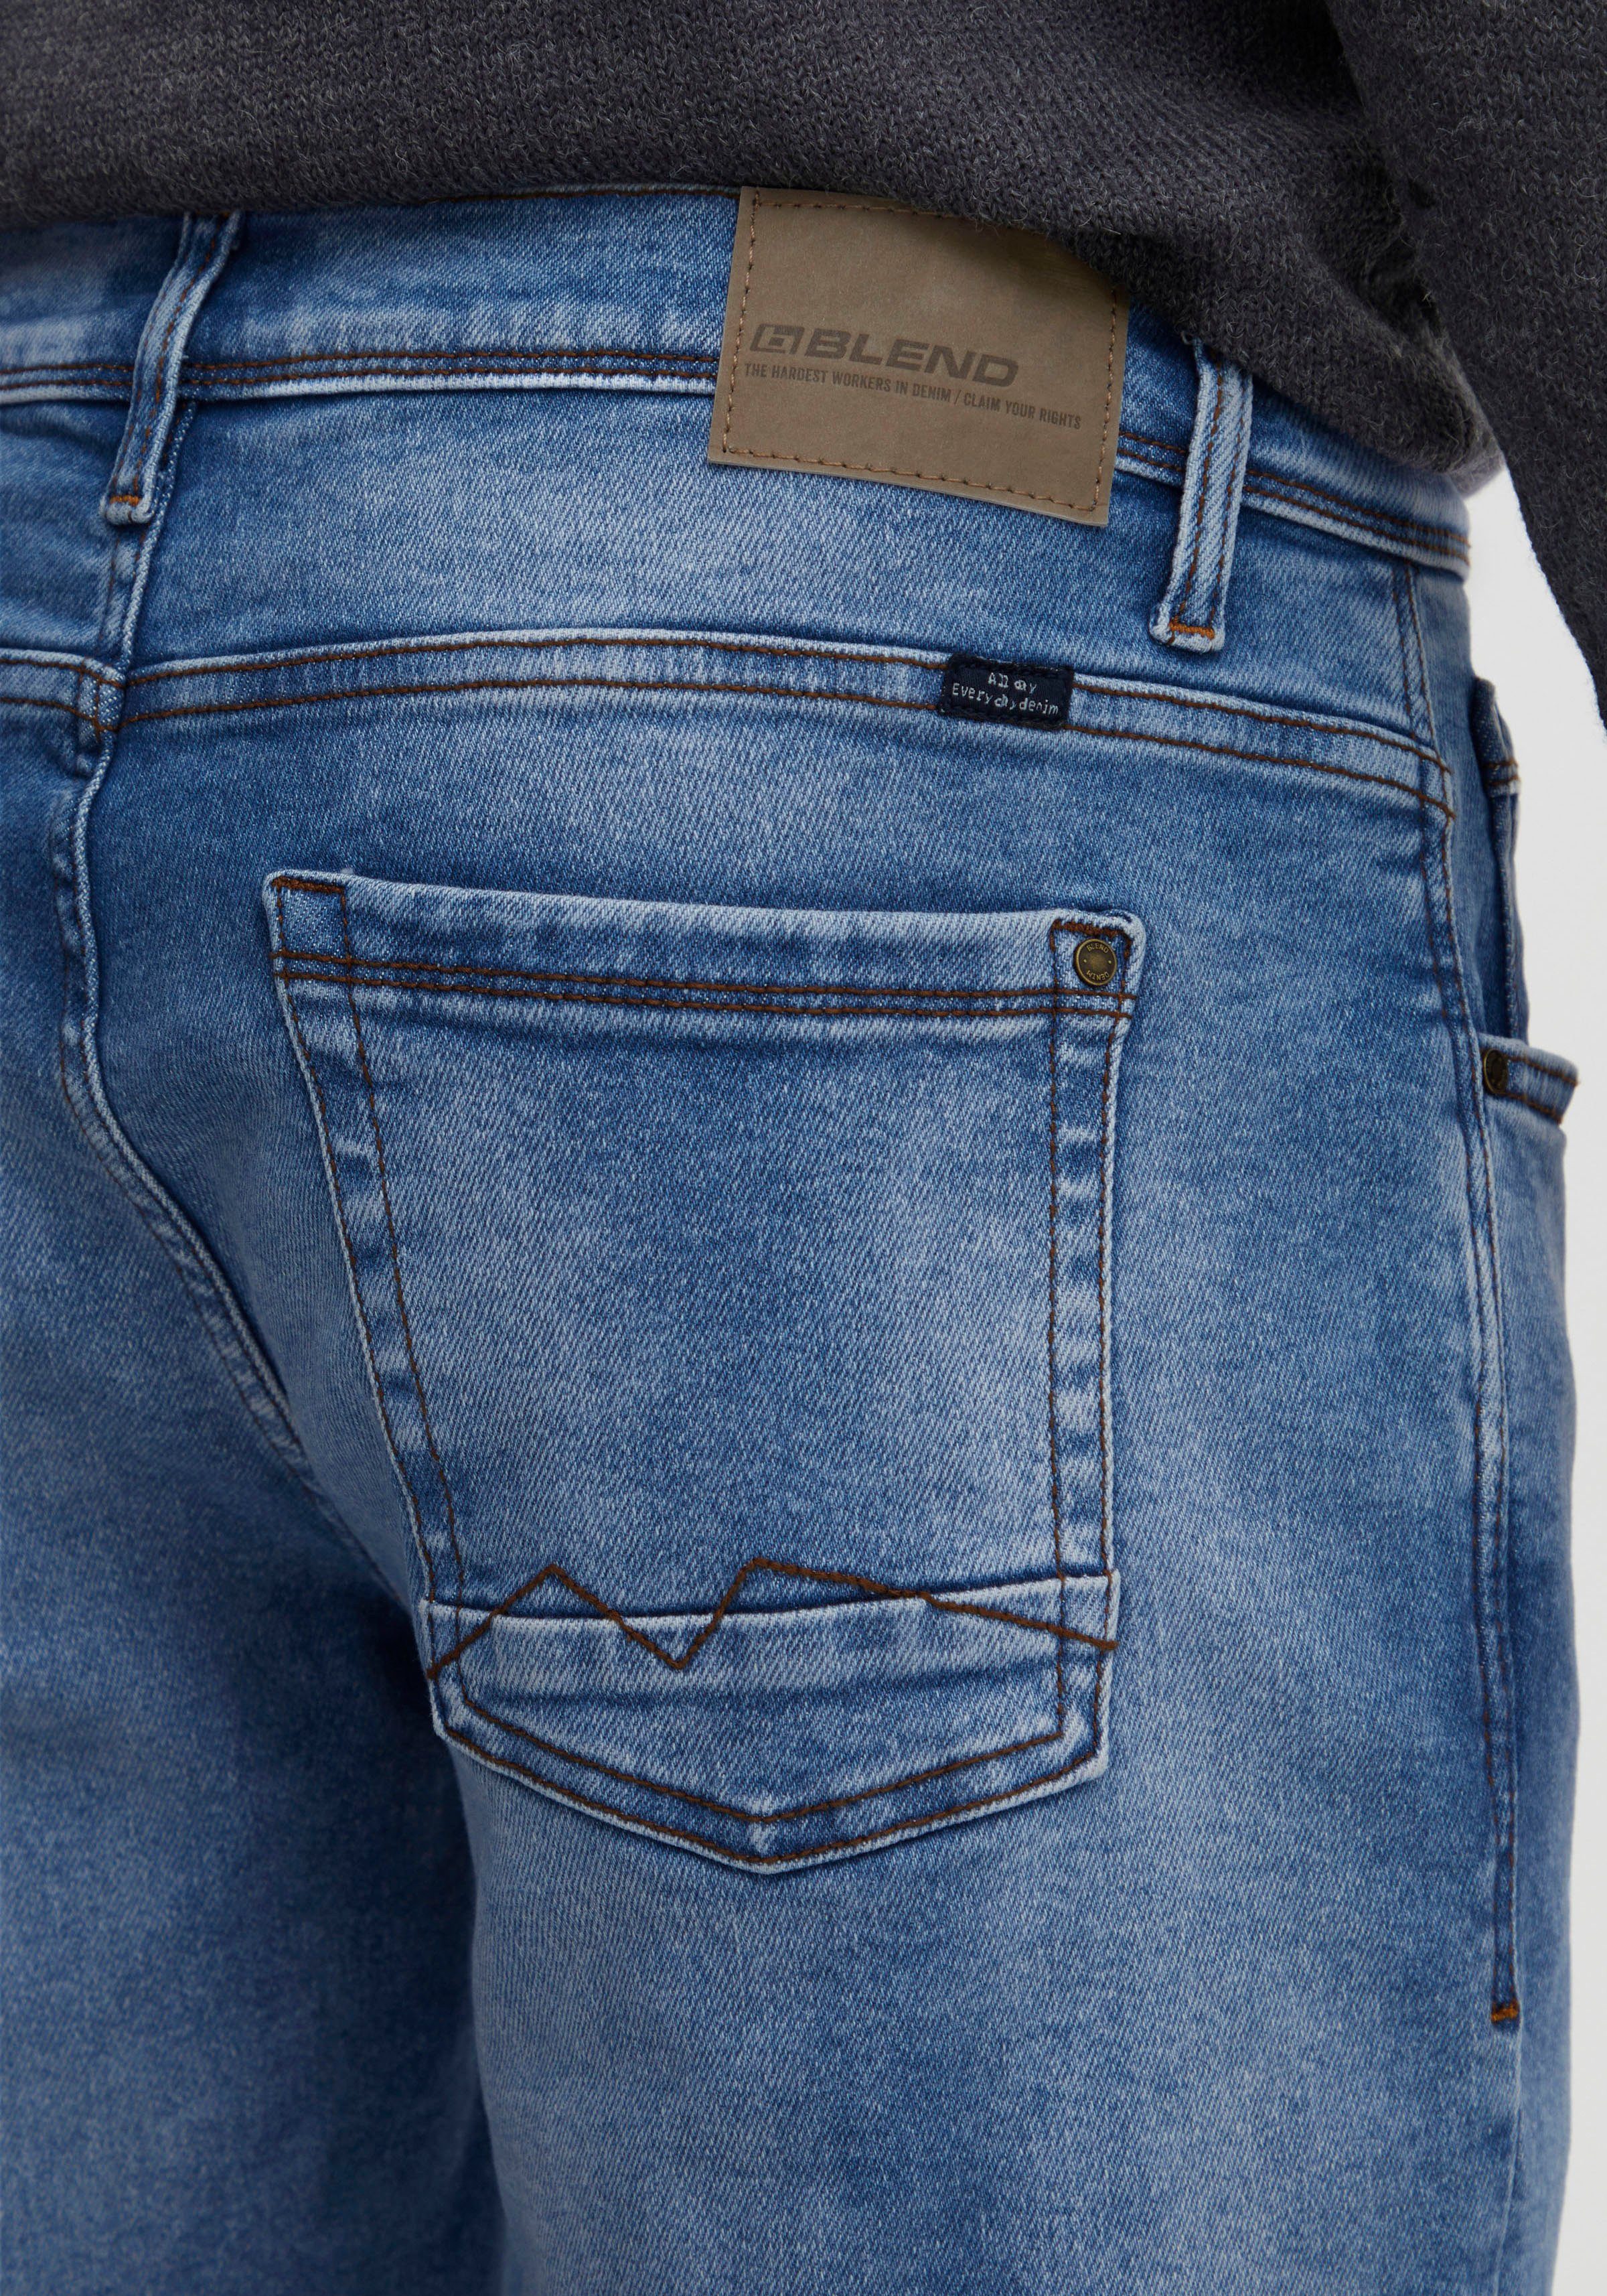 Blizzard Multiflex BL blue Jeans 5-Pocket-Jeans Blend